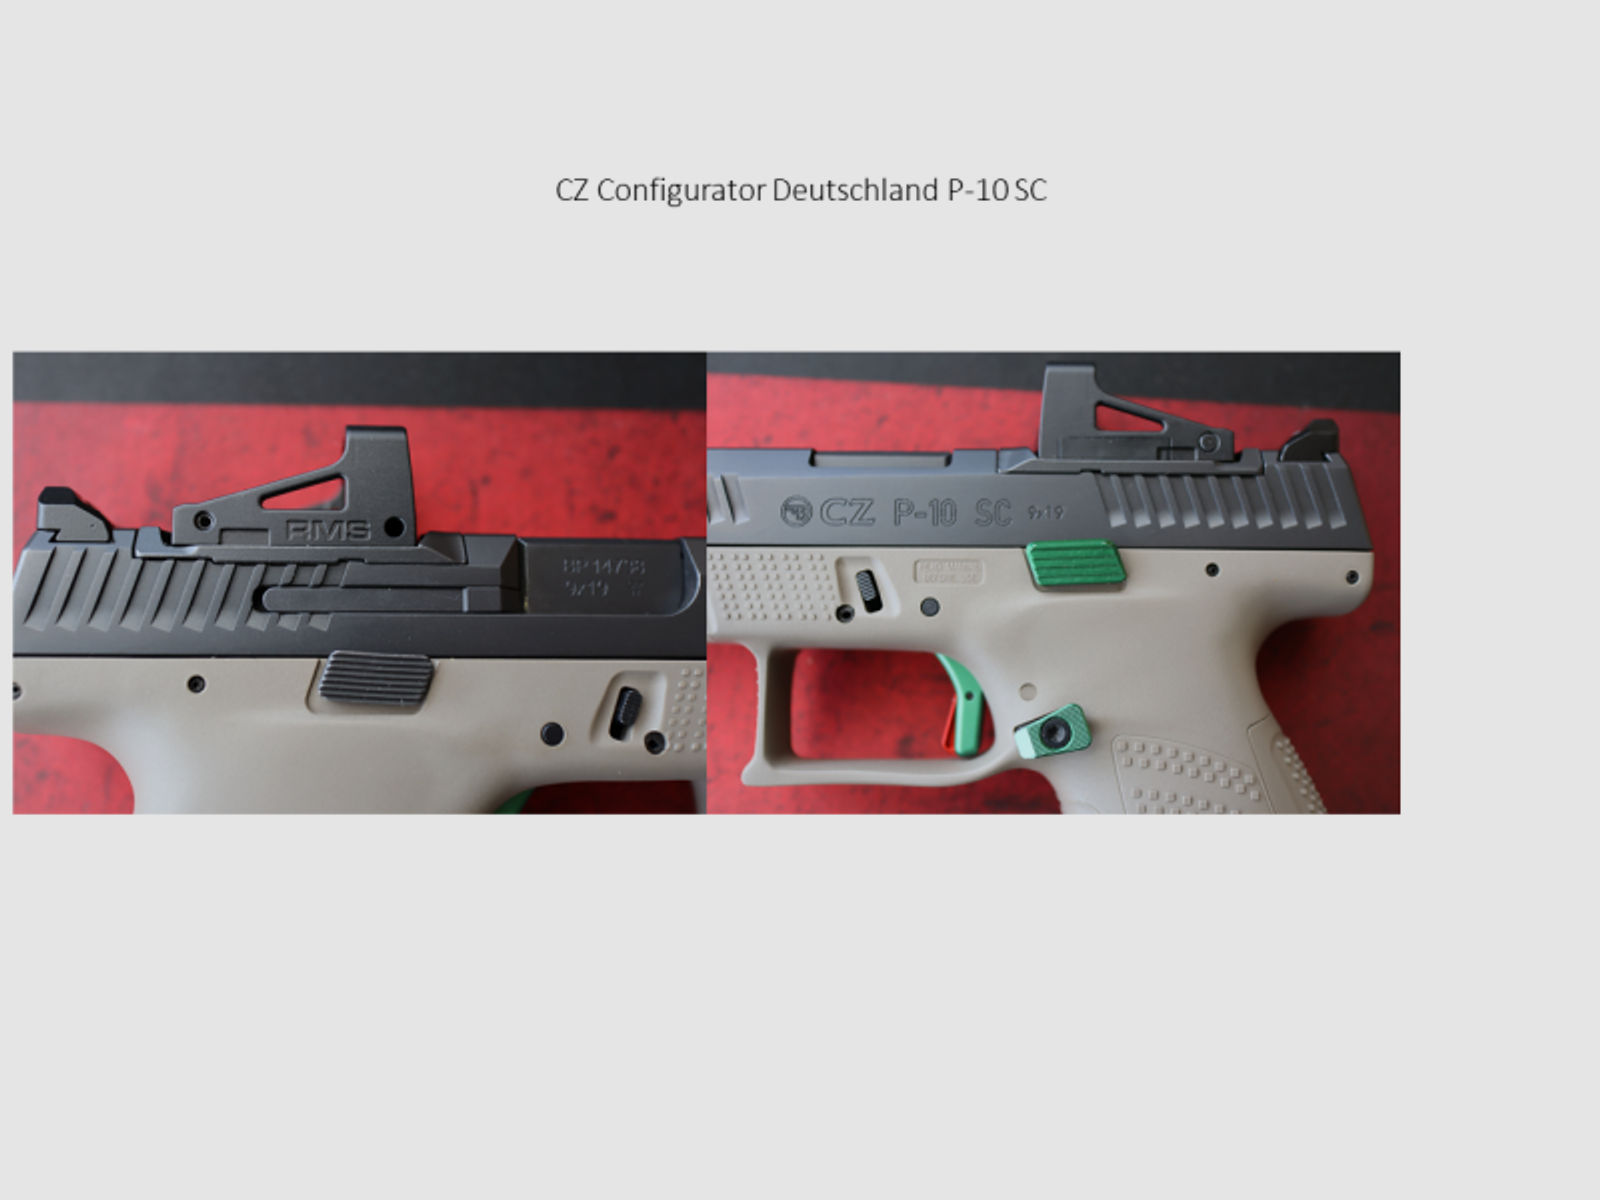 CZ Configurator Deutschland Pistole P-10 SC - 9 mm Luger